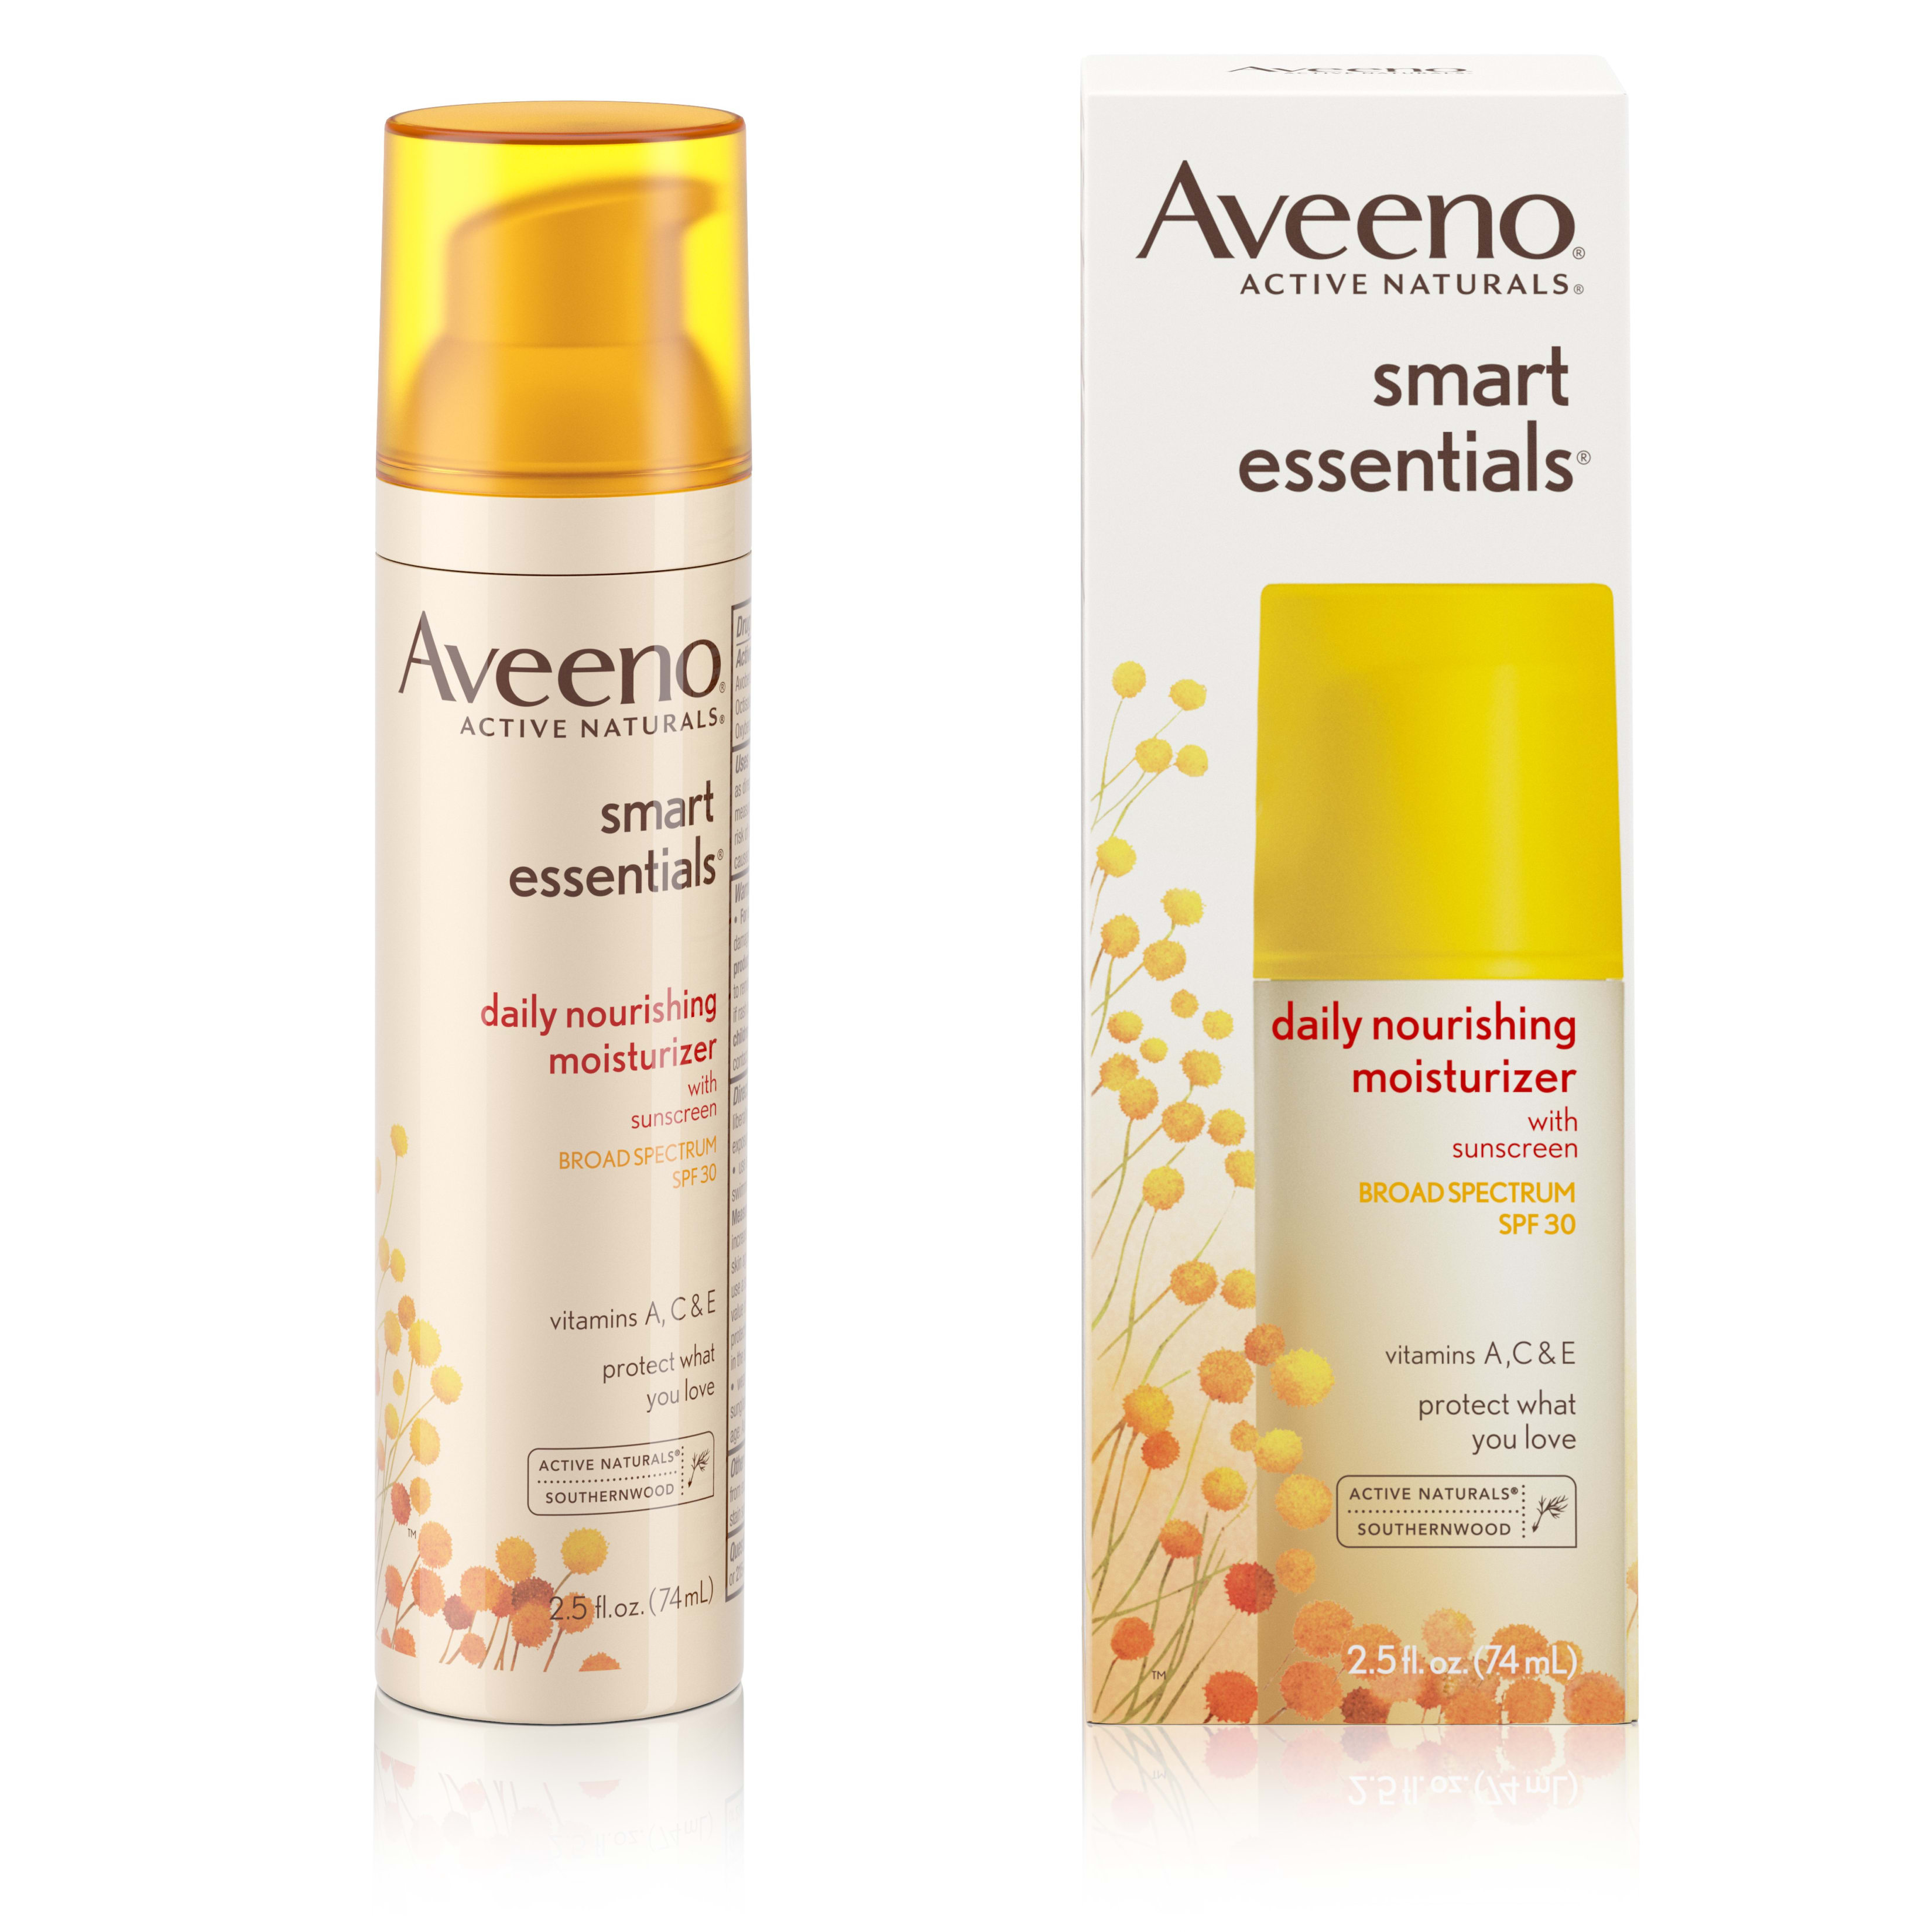 Aveeno Smart Essentials Daily Nourishing Moisturizer Oil Free With Broad Spectrum Spf 30, 2.5 oz - image 1 of 9